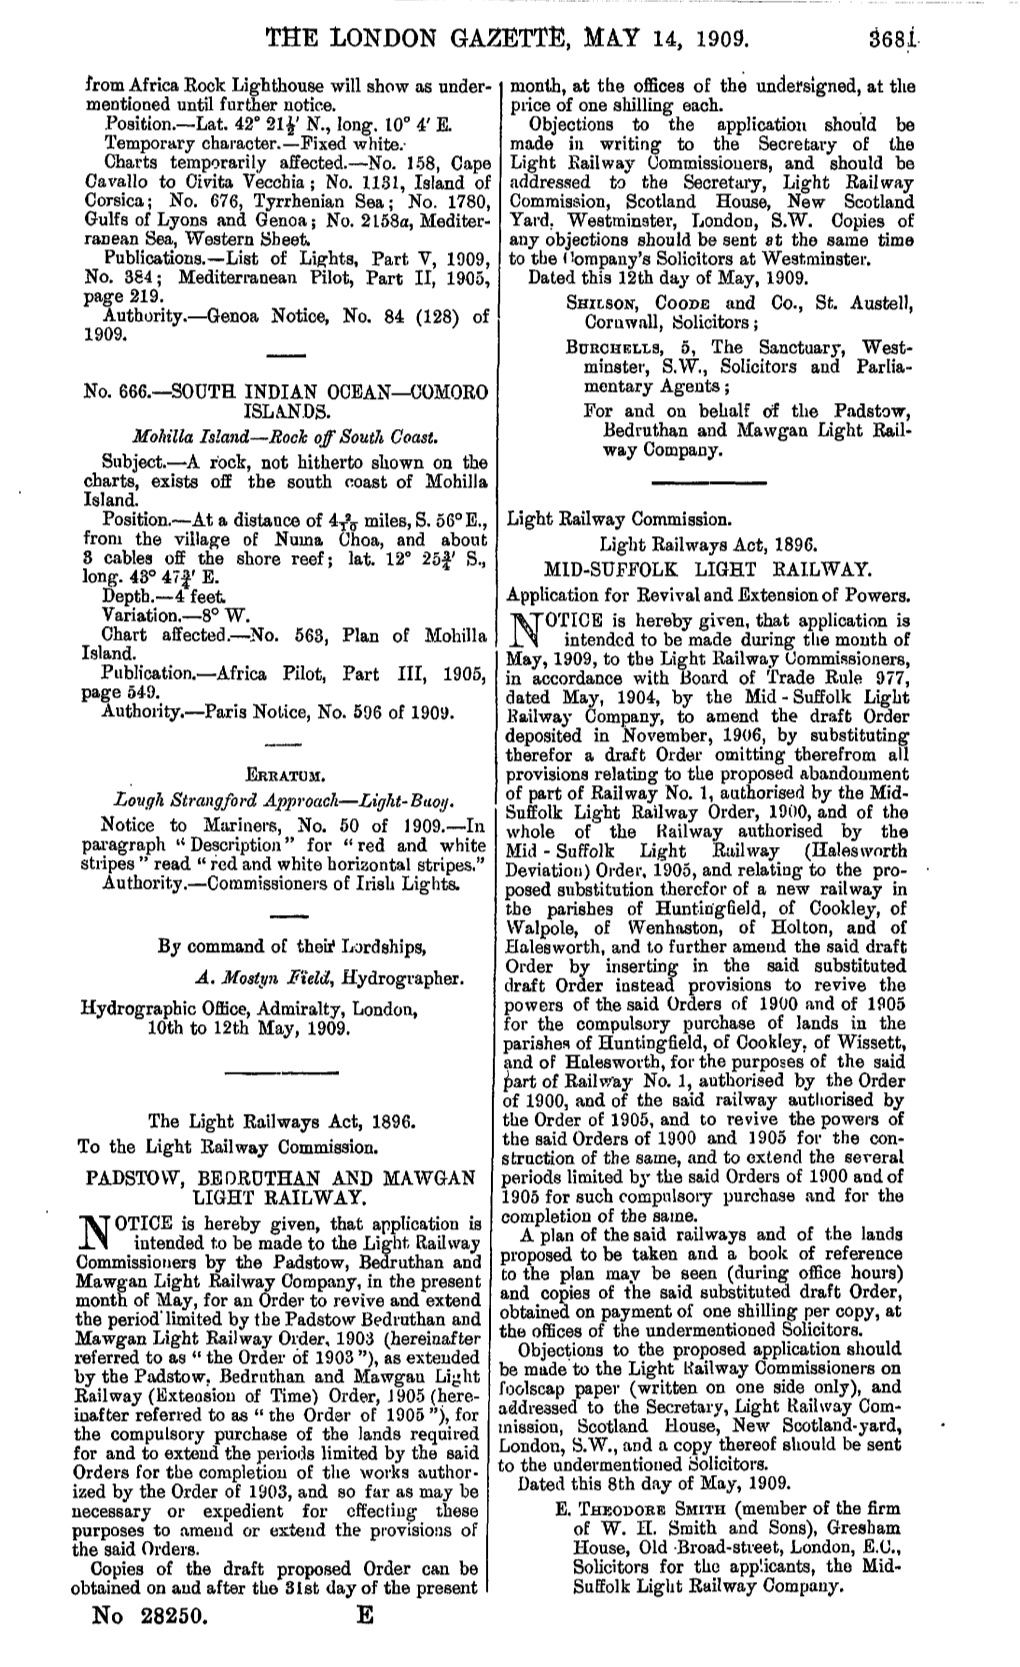 THE LONDON GAZETTE, MAY 14, 1909. No 28250. E